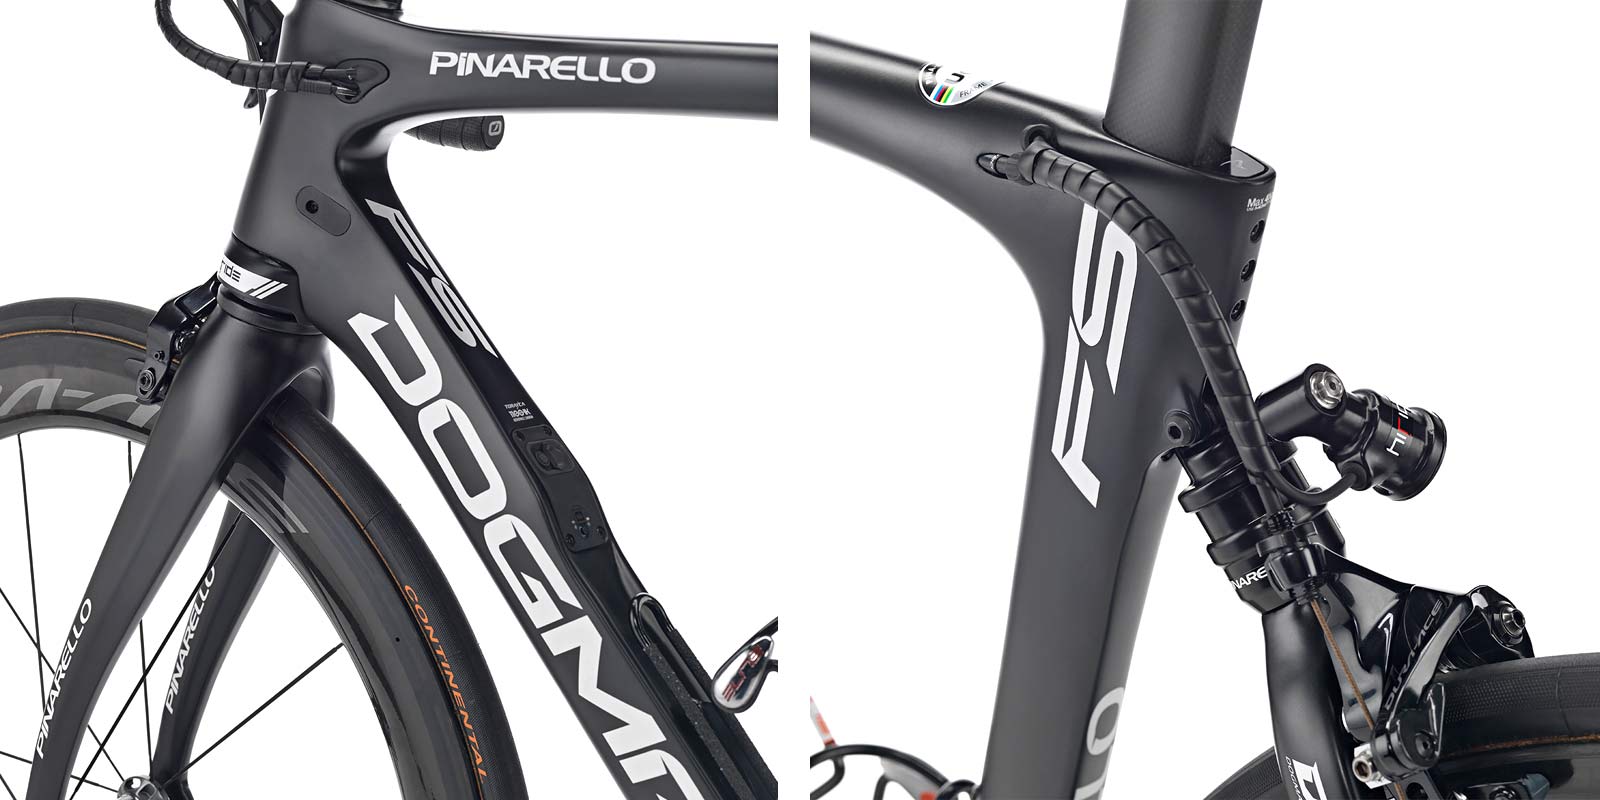 Pinarello Dogma FS road bike, electronic-control, full-suspension lightweight carbon road race bike